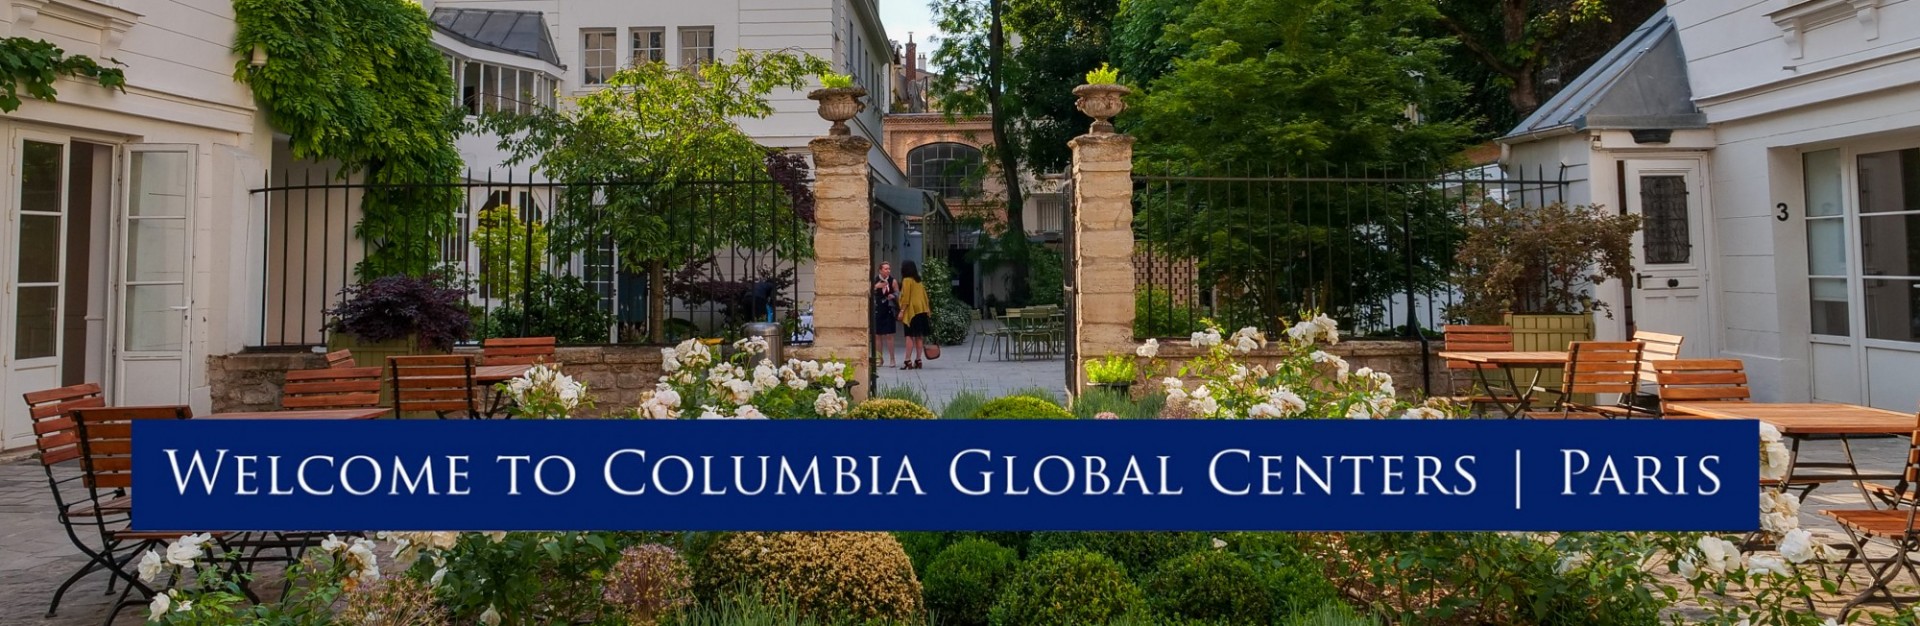 Columbia Global Centers l Paris